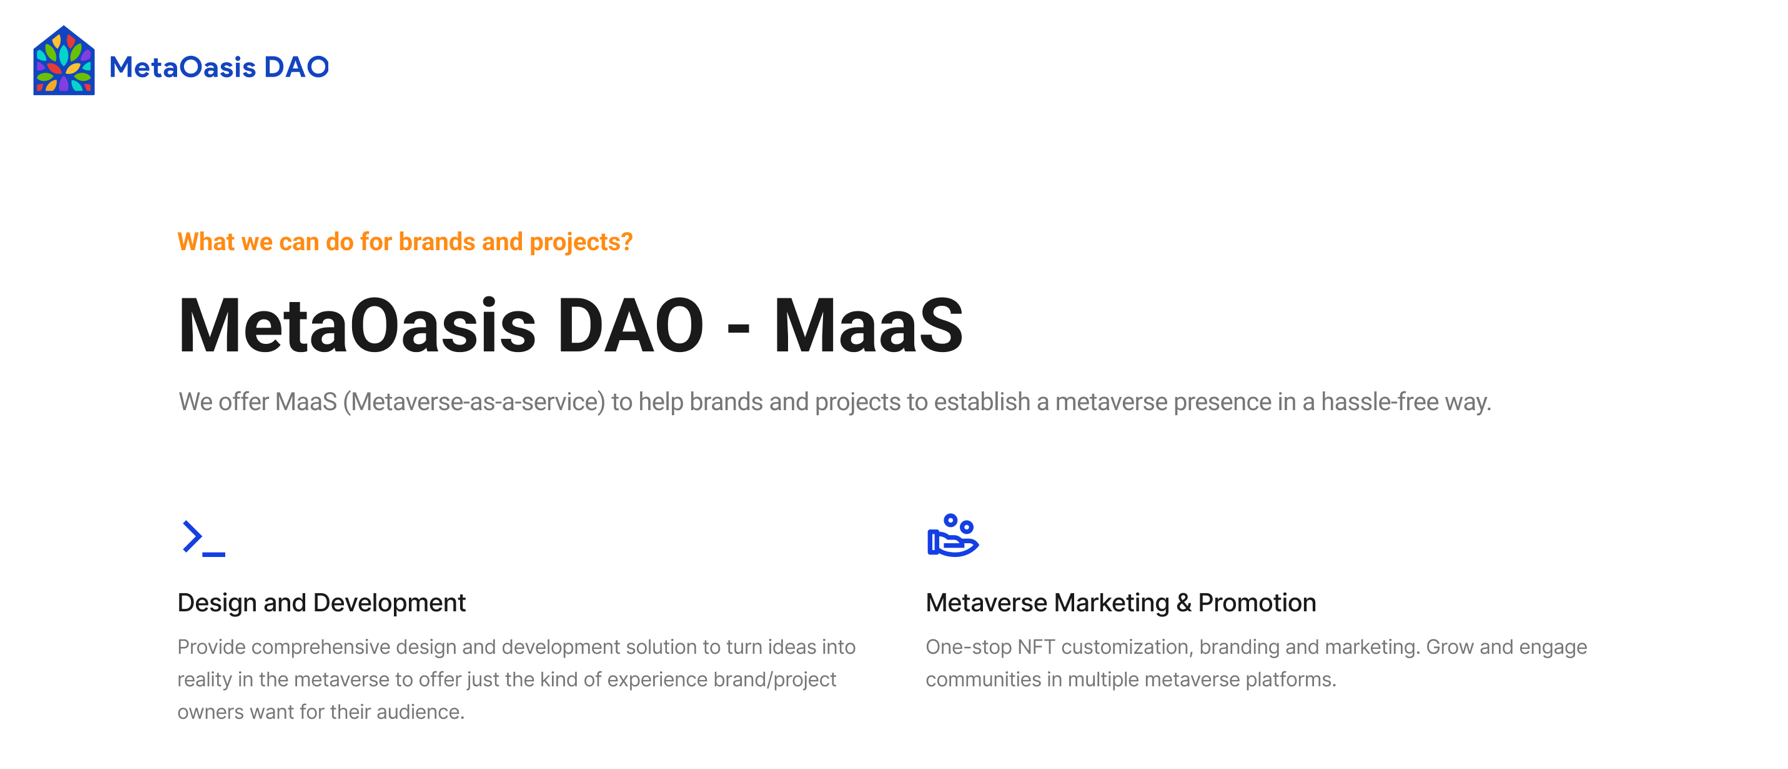 MetaOasis DAO：押注元宇宙創作者經濟賽道的一站式MaaS平台